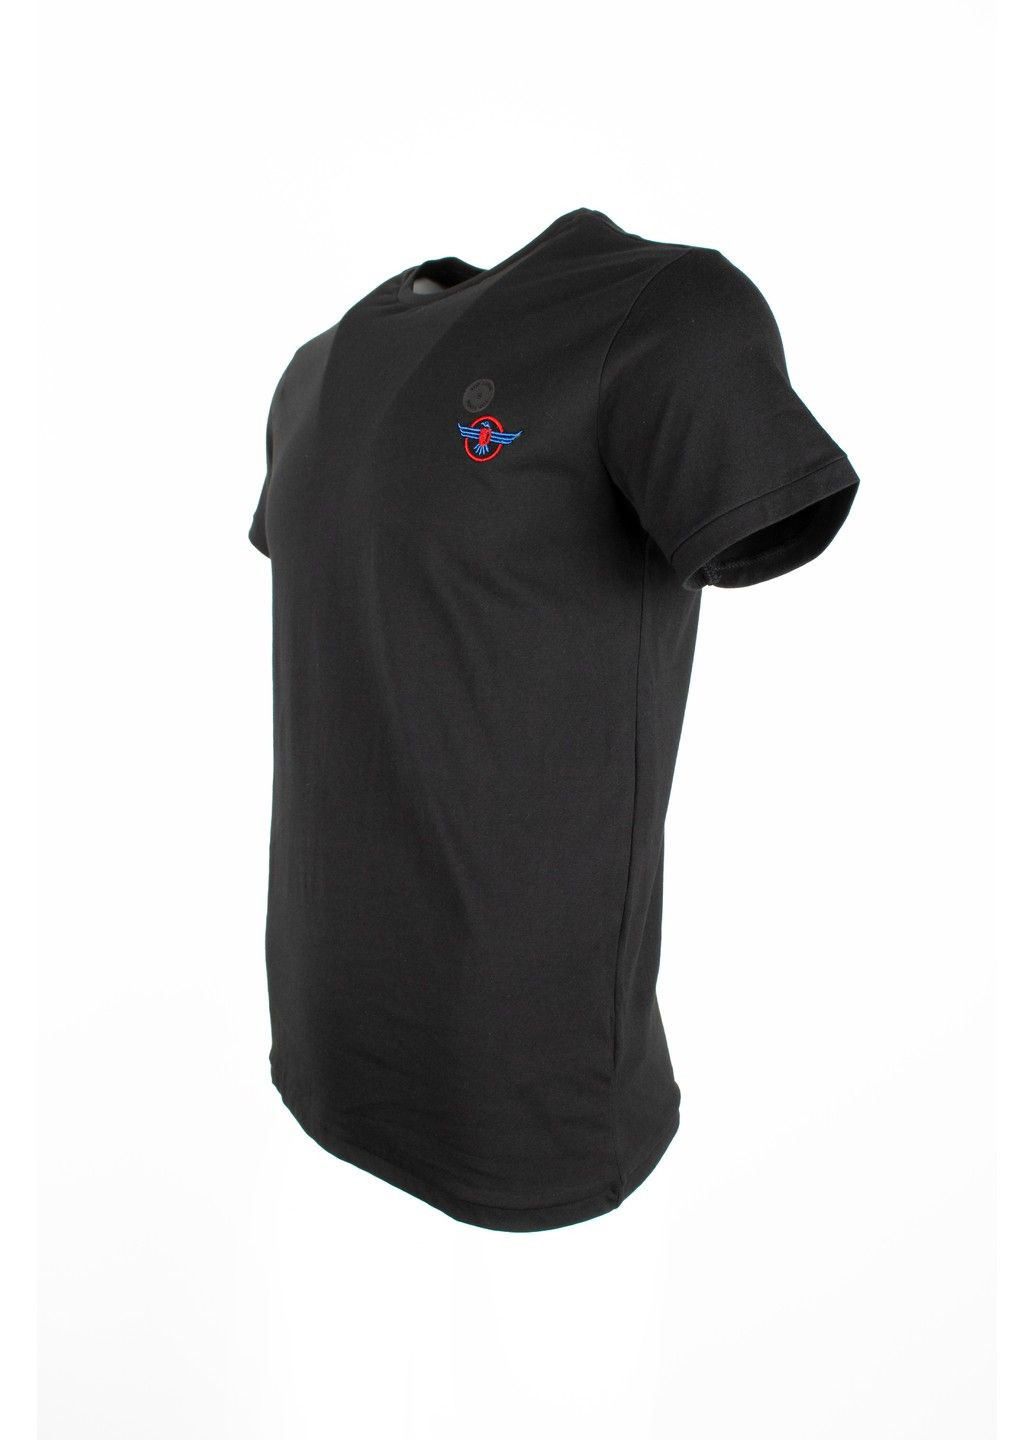 Черная футболка мужская top look черная 070821-001507 No Brand